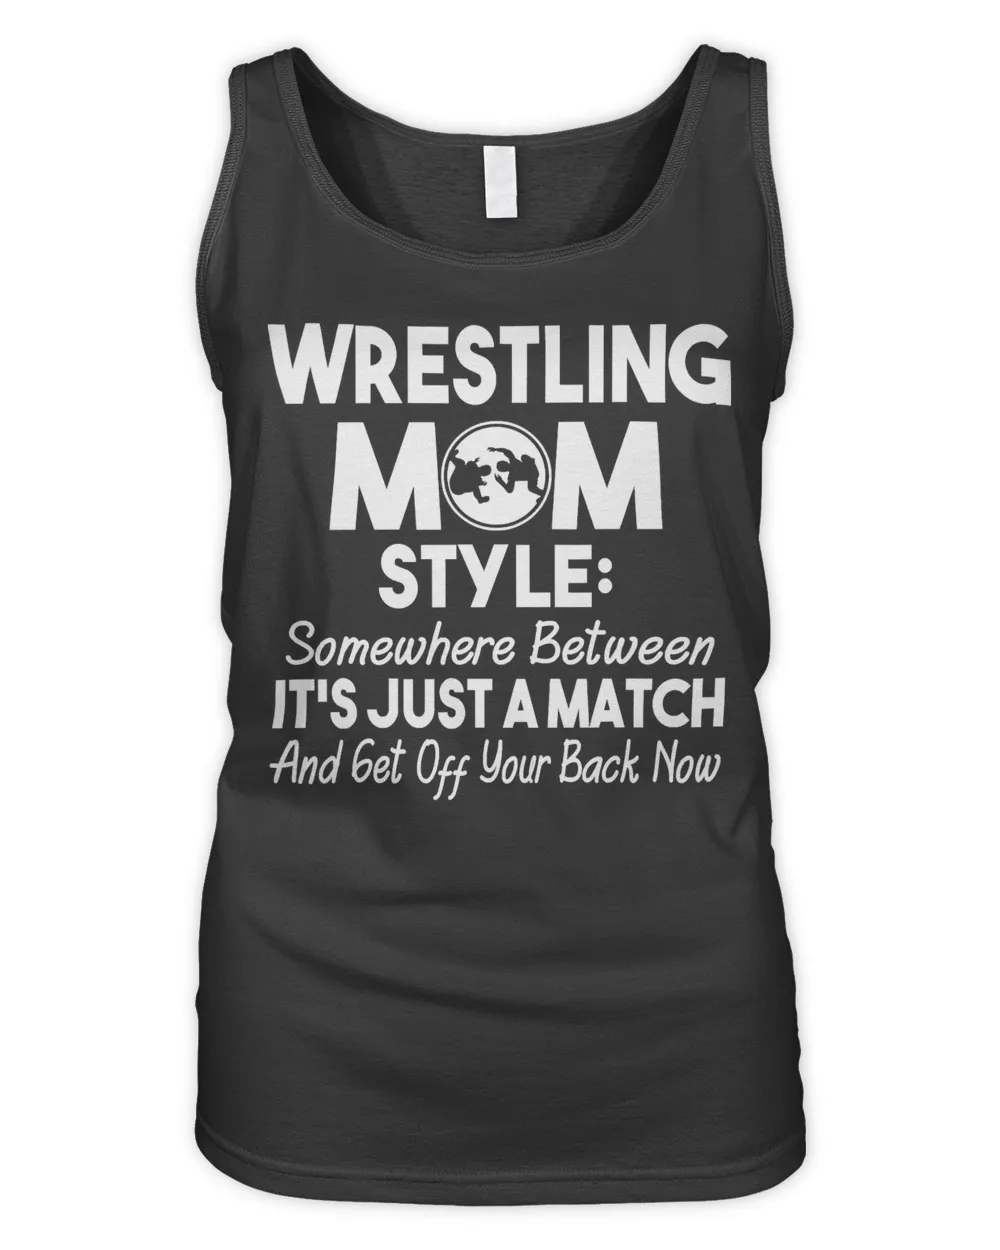 Wrestling Mom Style Funny Gift For Mom T-Shirt